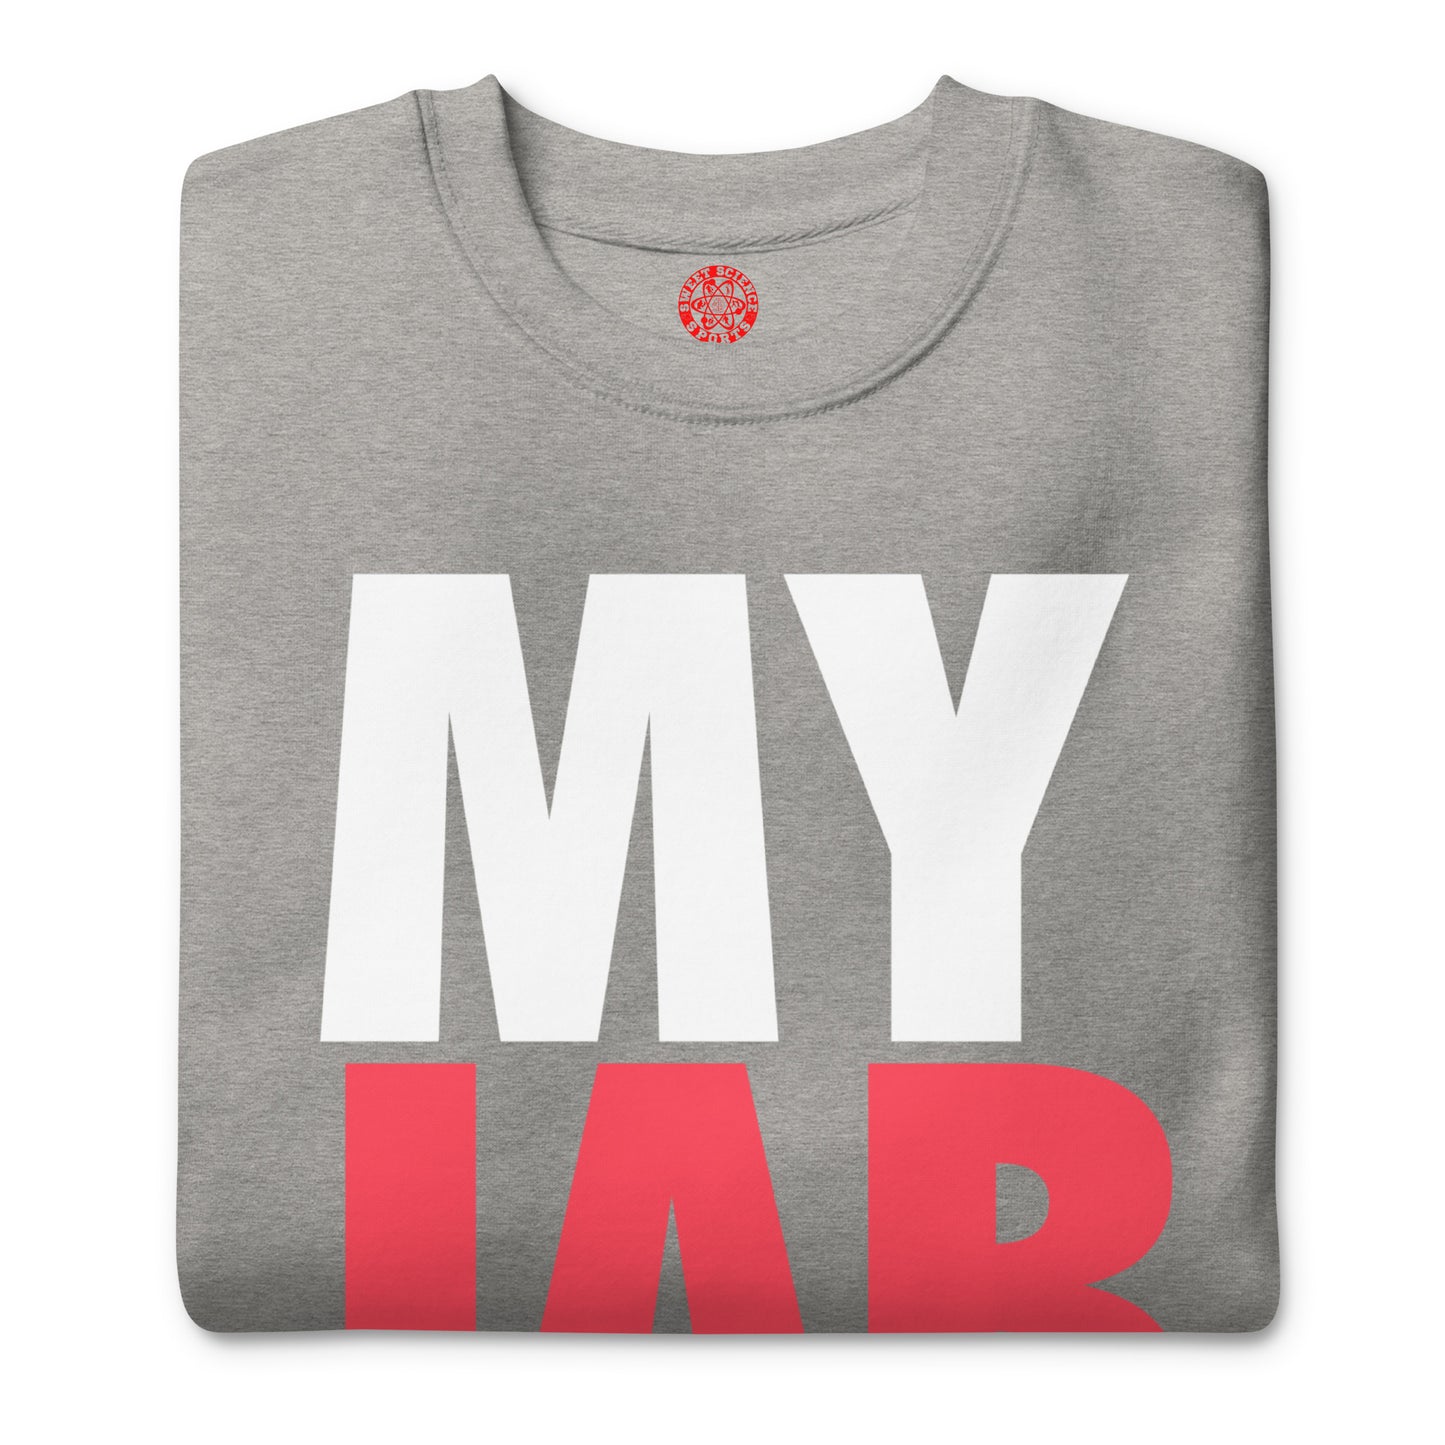 Sweet Science Sports "MY JAB DISCIPLINE"  Premium Sweatshirt